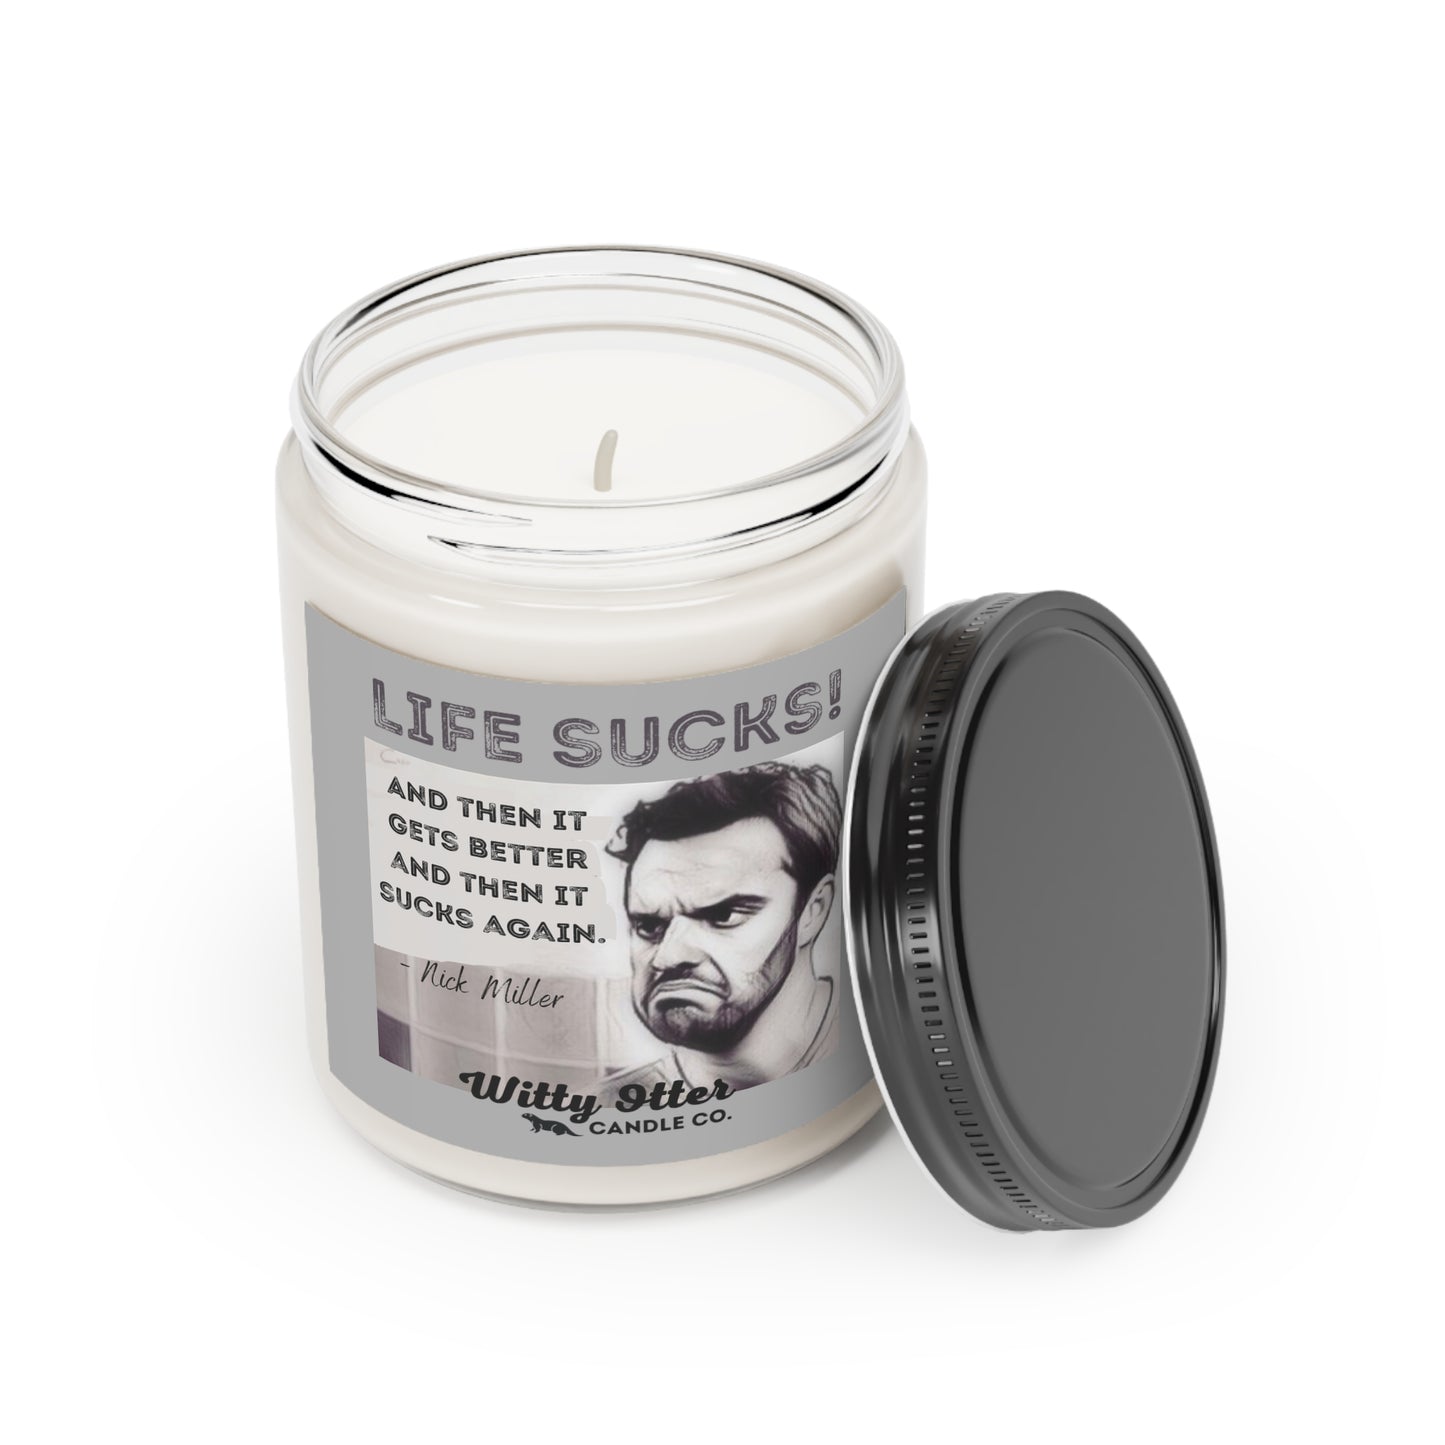 Nick Miller, Life Sucks 9 oz candle | New Girl show home decor | New Girl fan gift